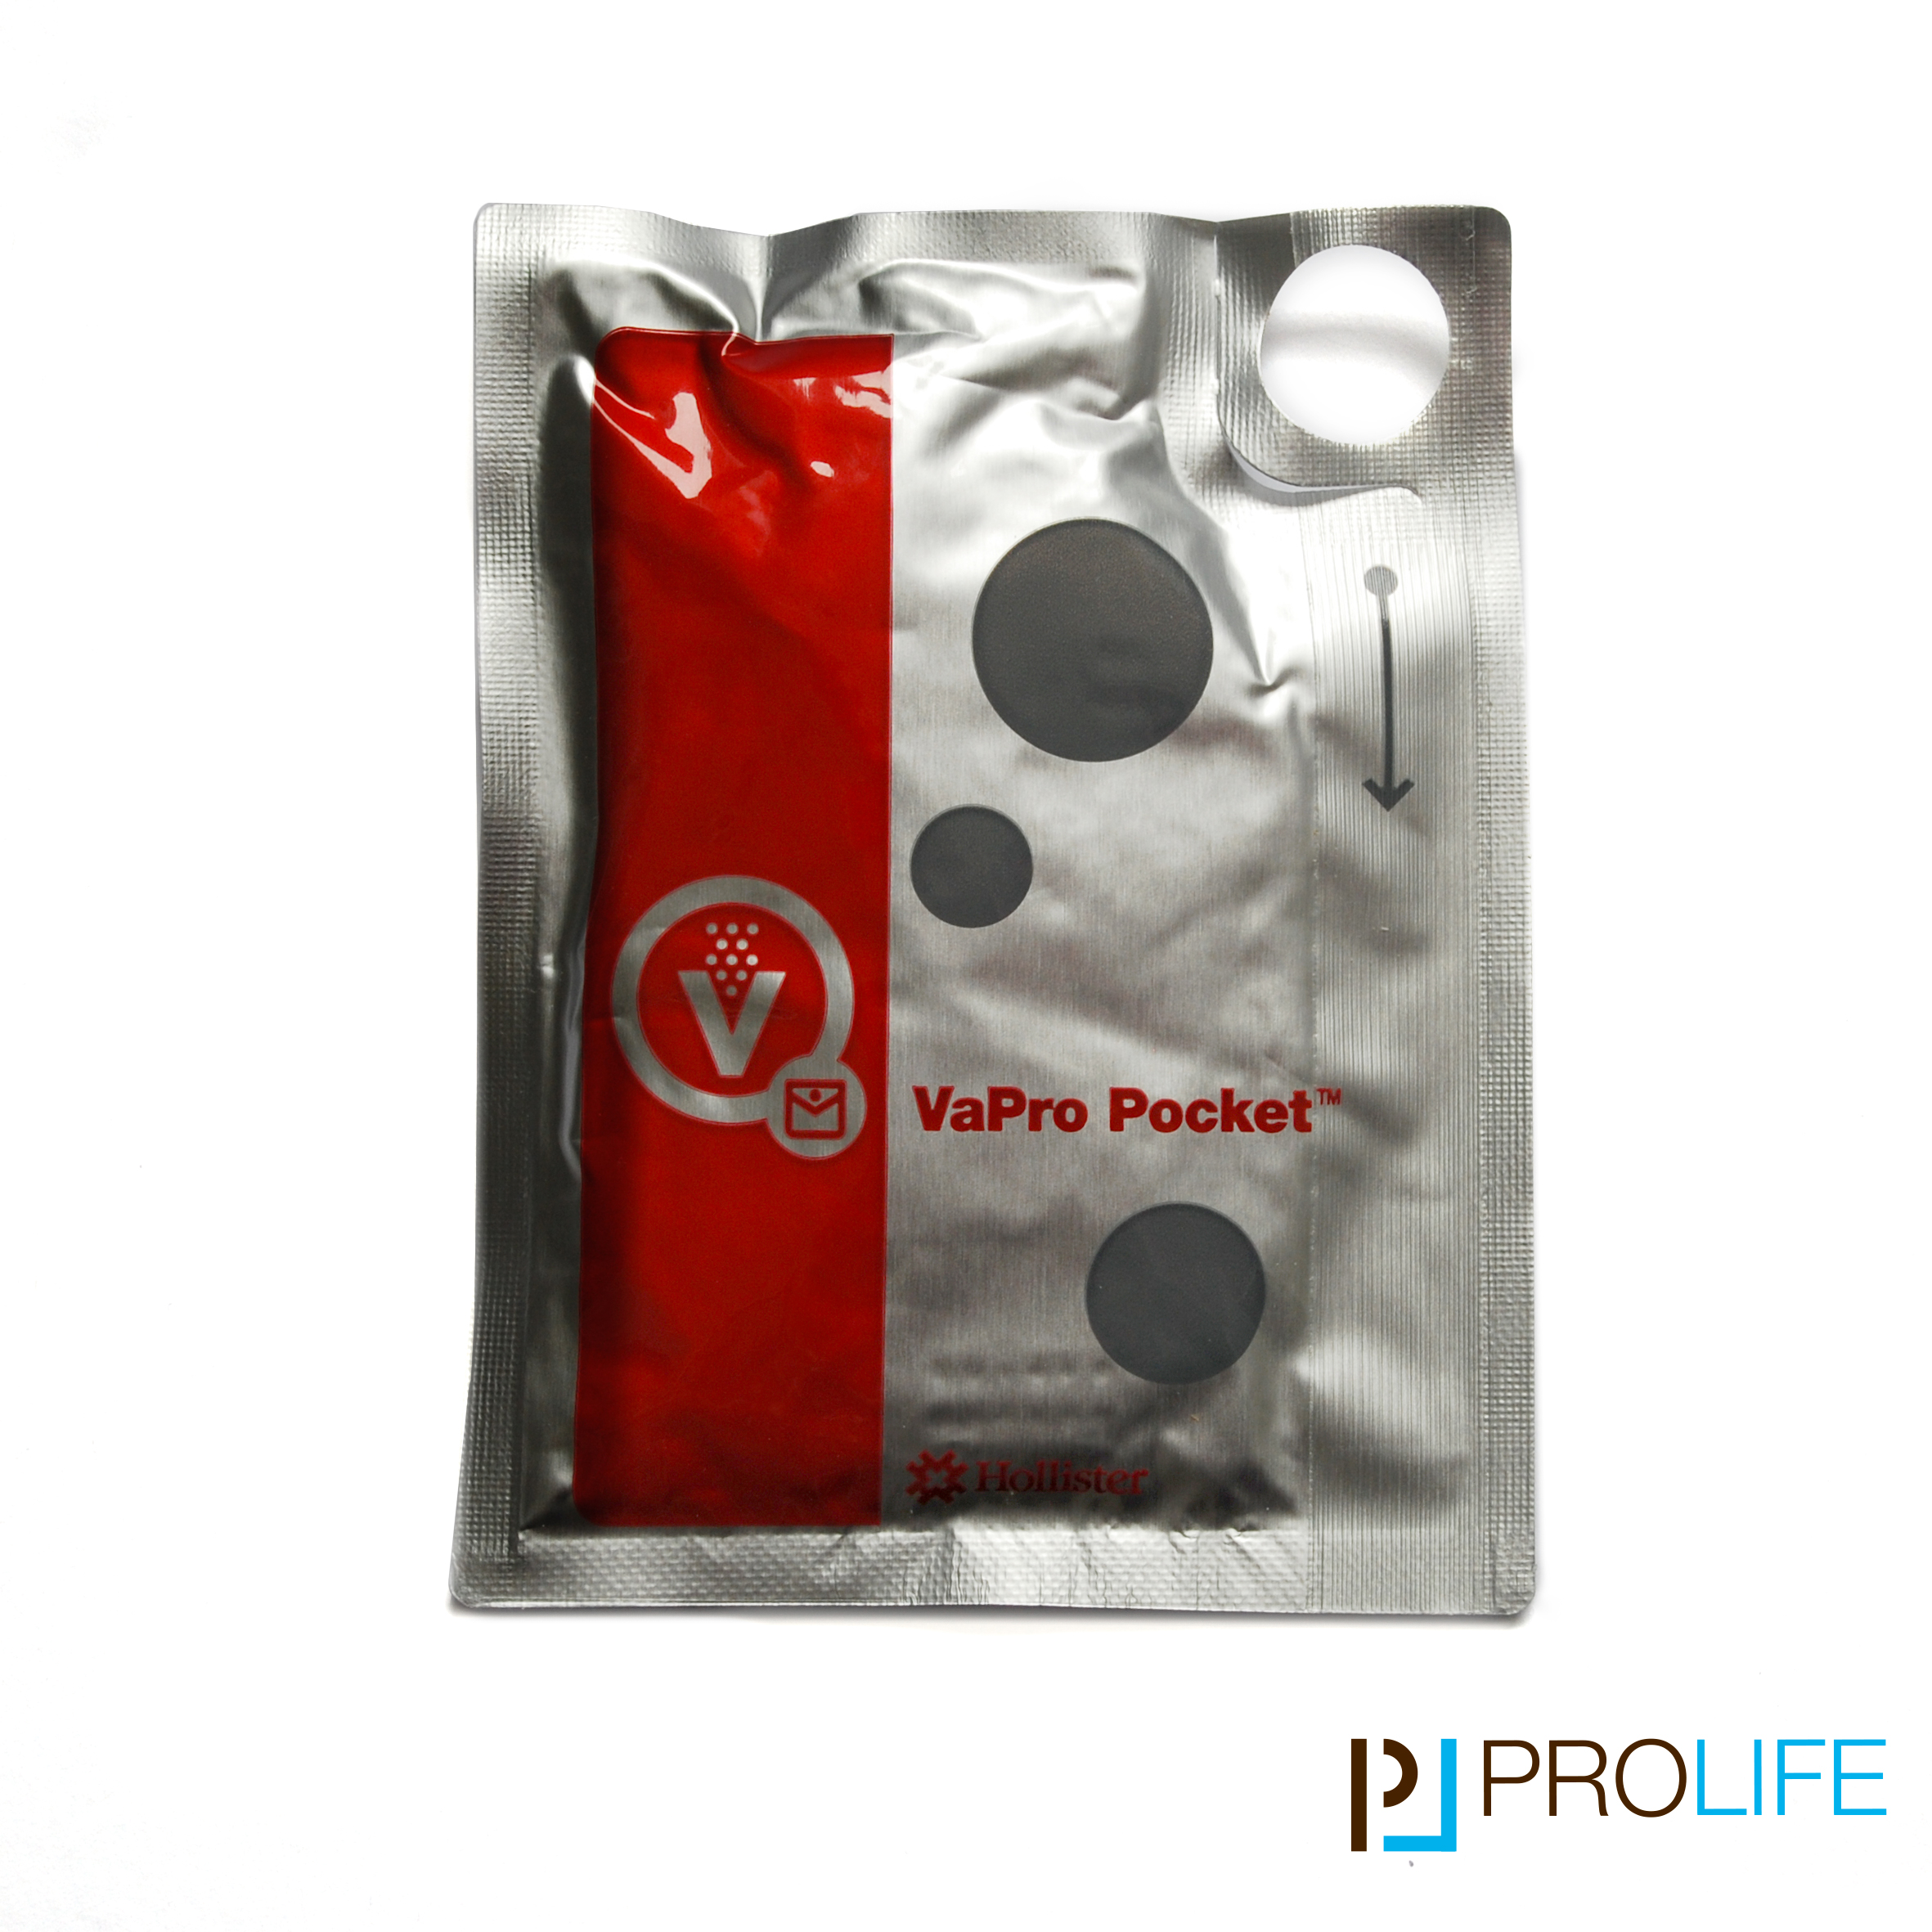 Transurethraler Einmalkatheter VaPro Pocket Abb1